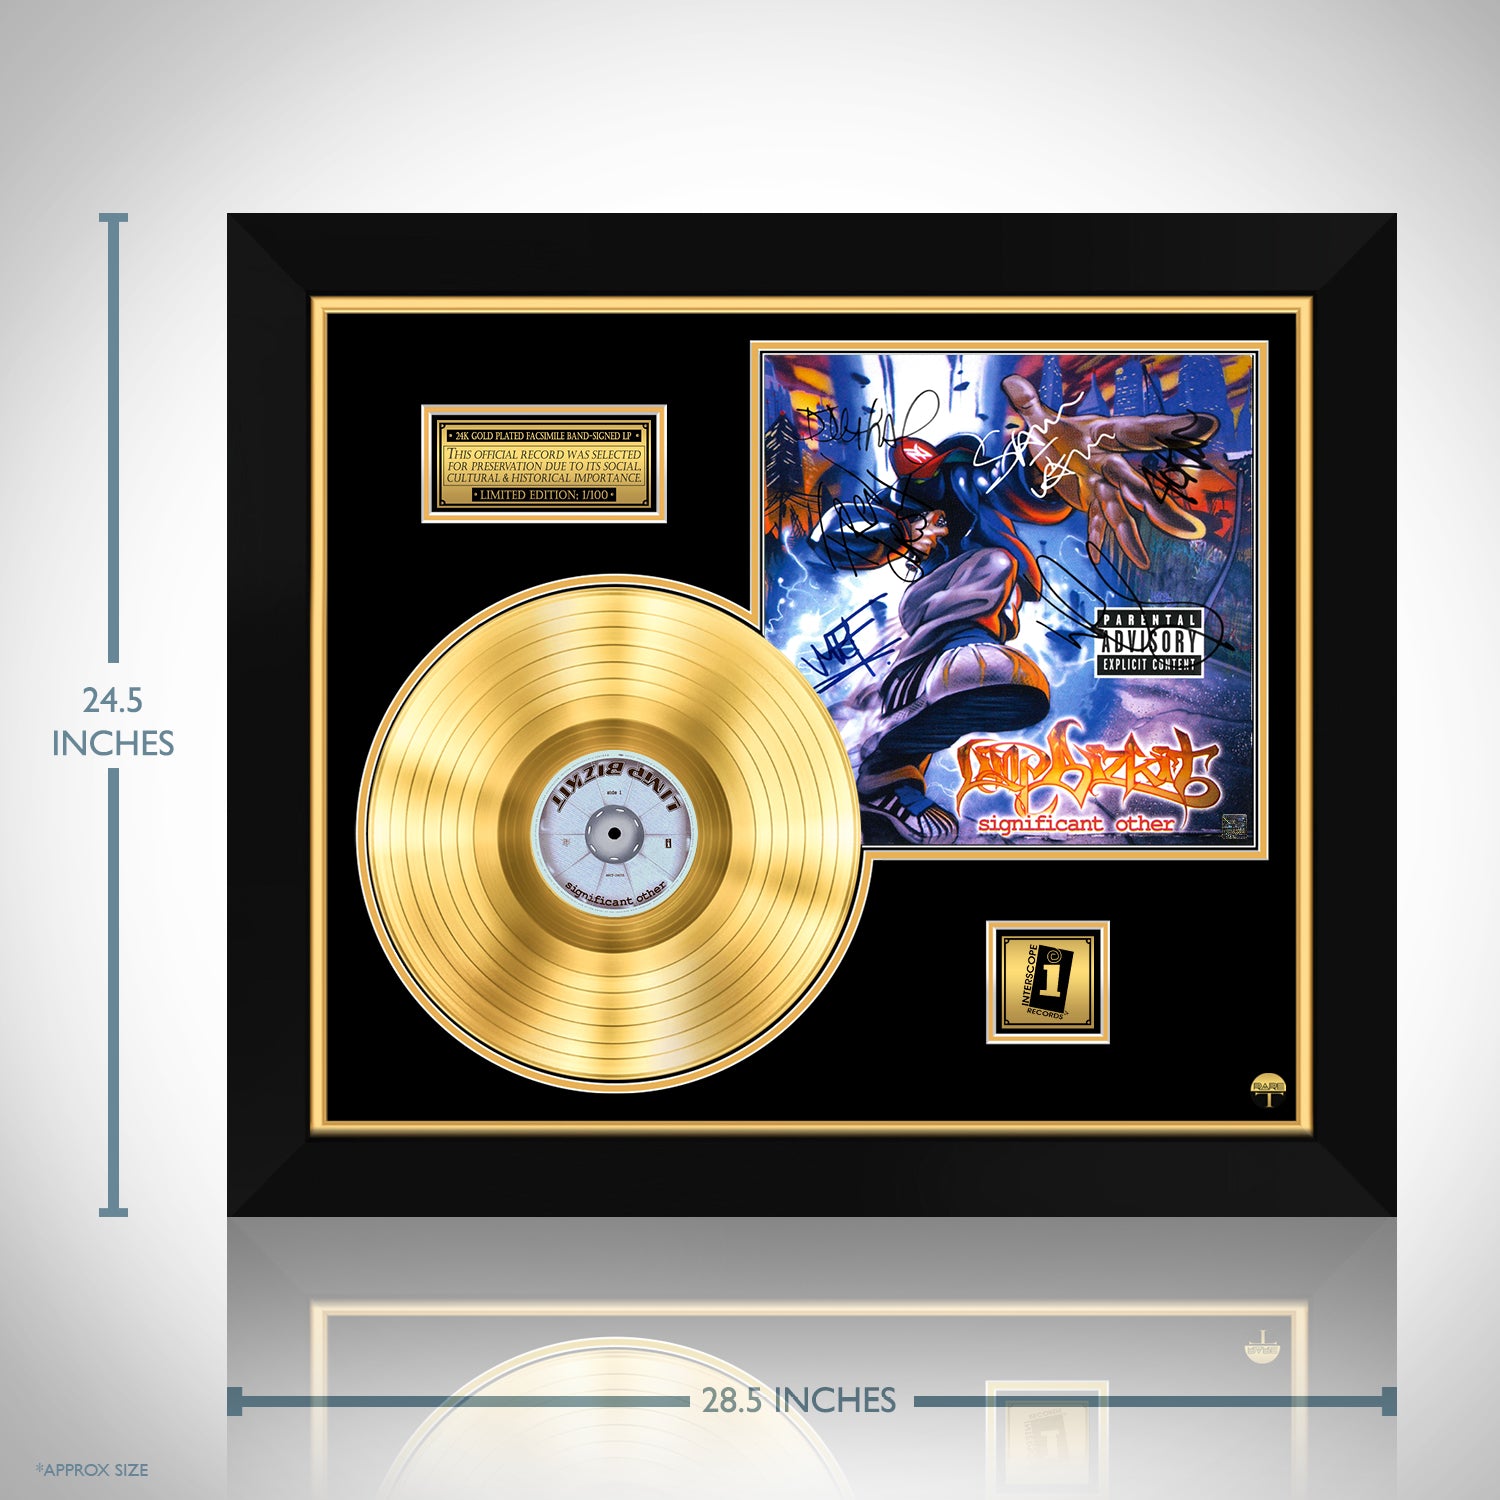 Limp Bizkit Significant Others Gold LP Limited Signature Edition 